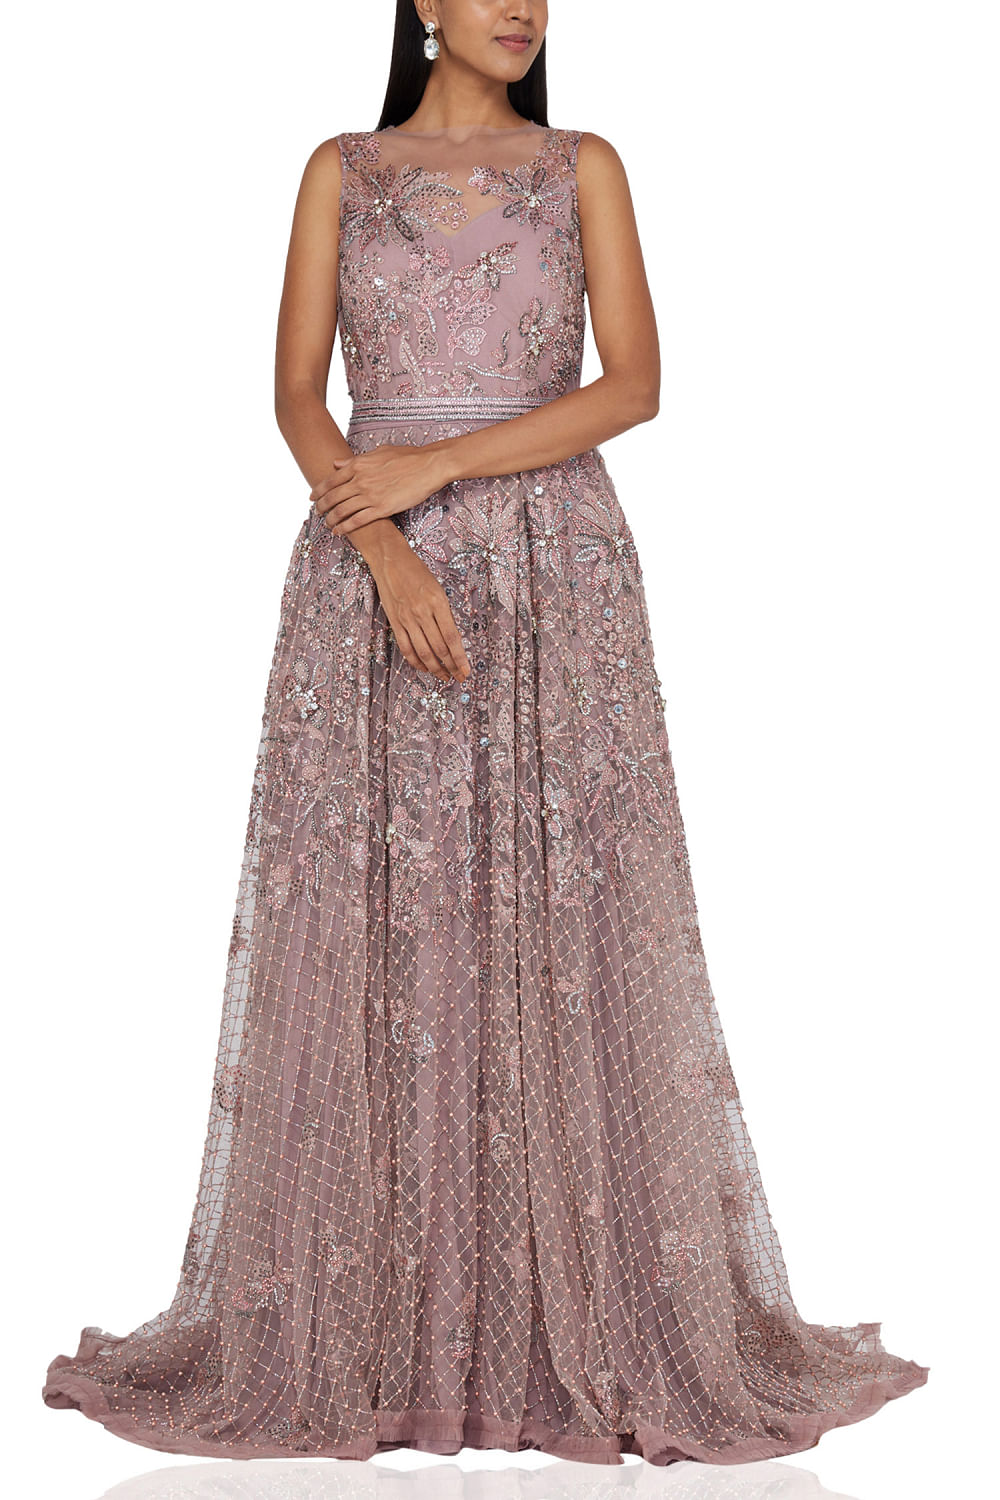 Nitya Bajaj | Shop Designer Womenswear Collection Online at Aashni & Co.